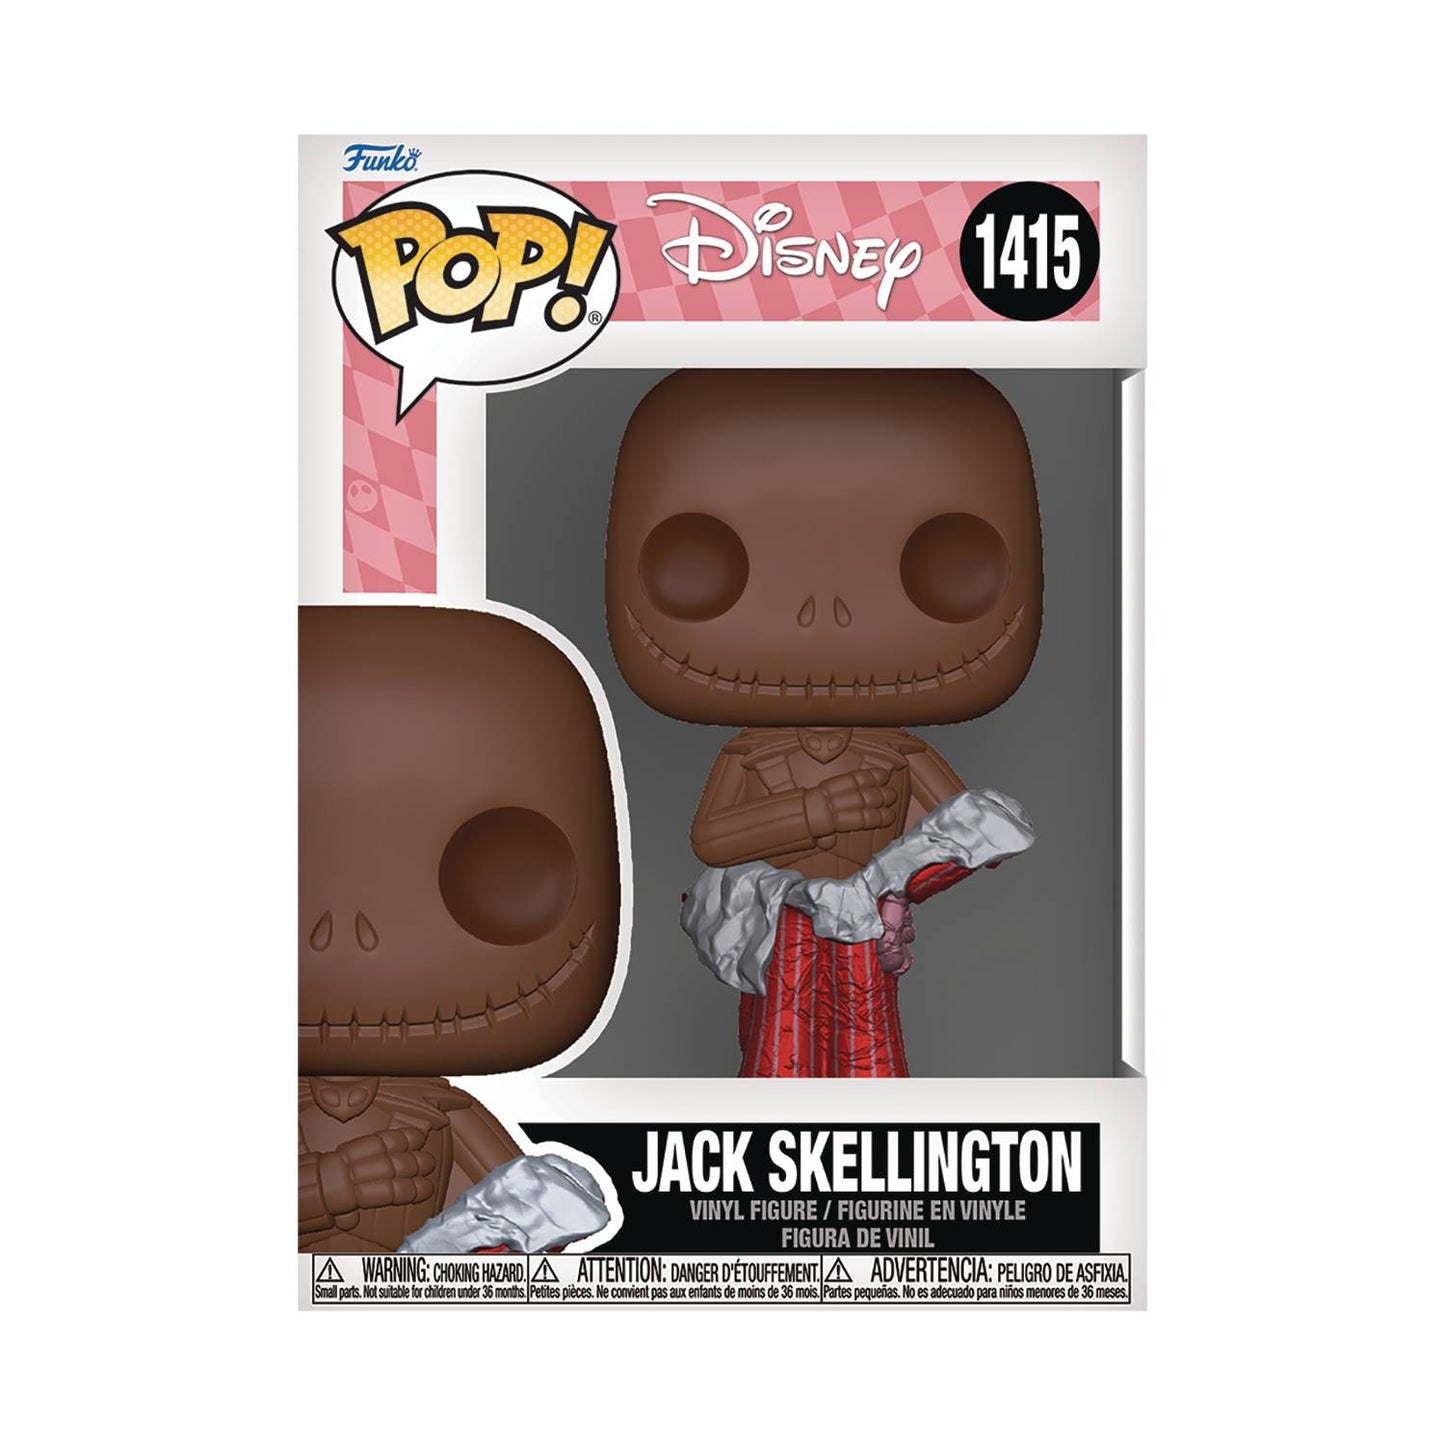 (PRE-ORDER) Funko POP! Disney: The Nightmare Before Christmas - Jack Skellington #1415 (Valentine's Day Chocolate)